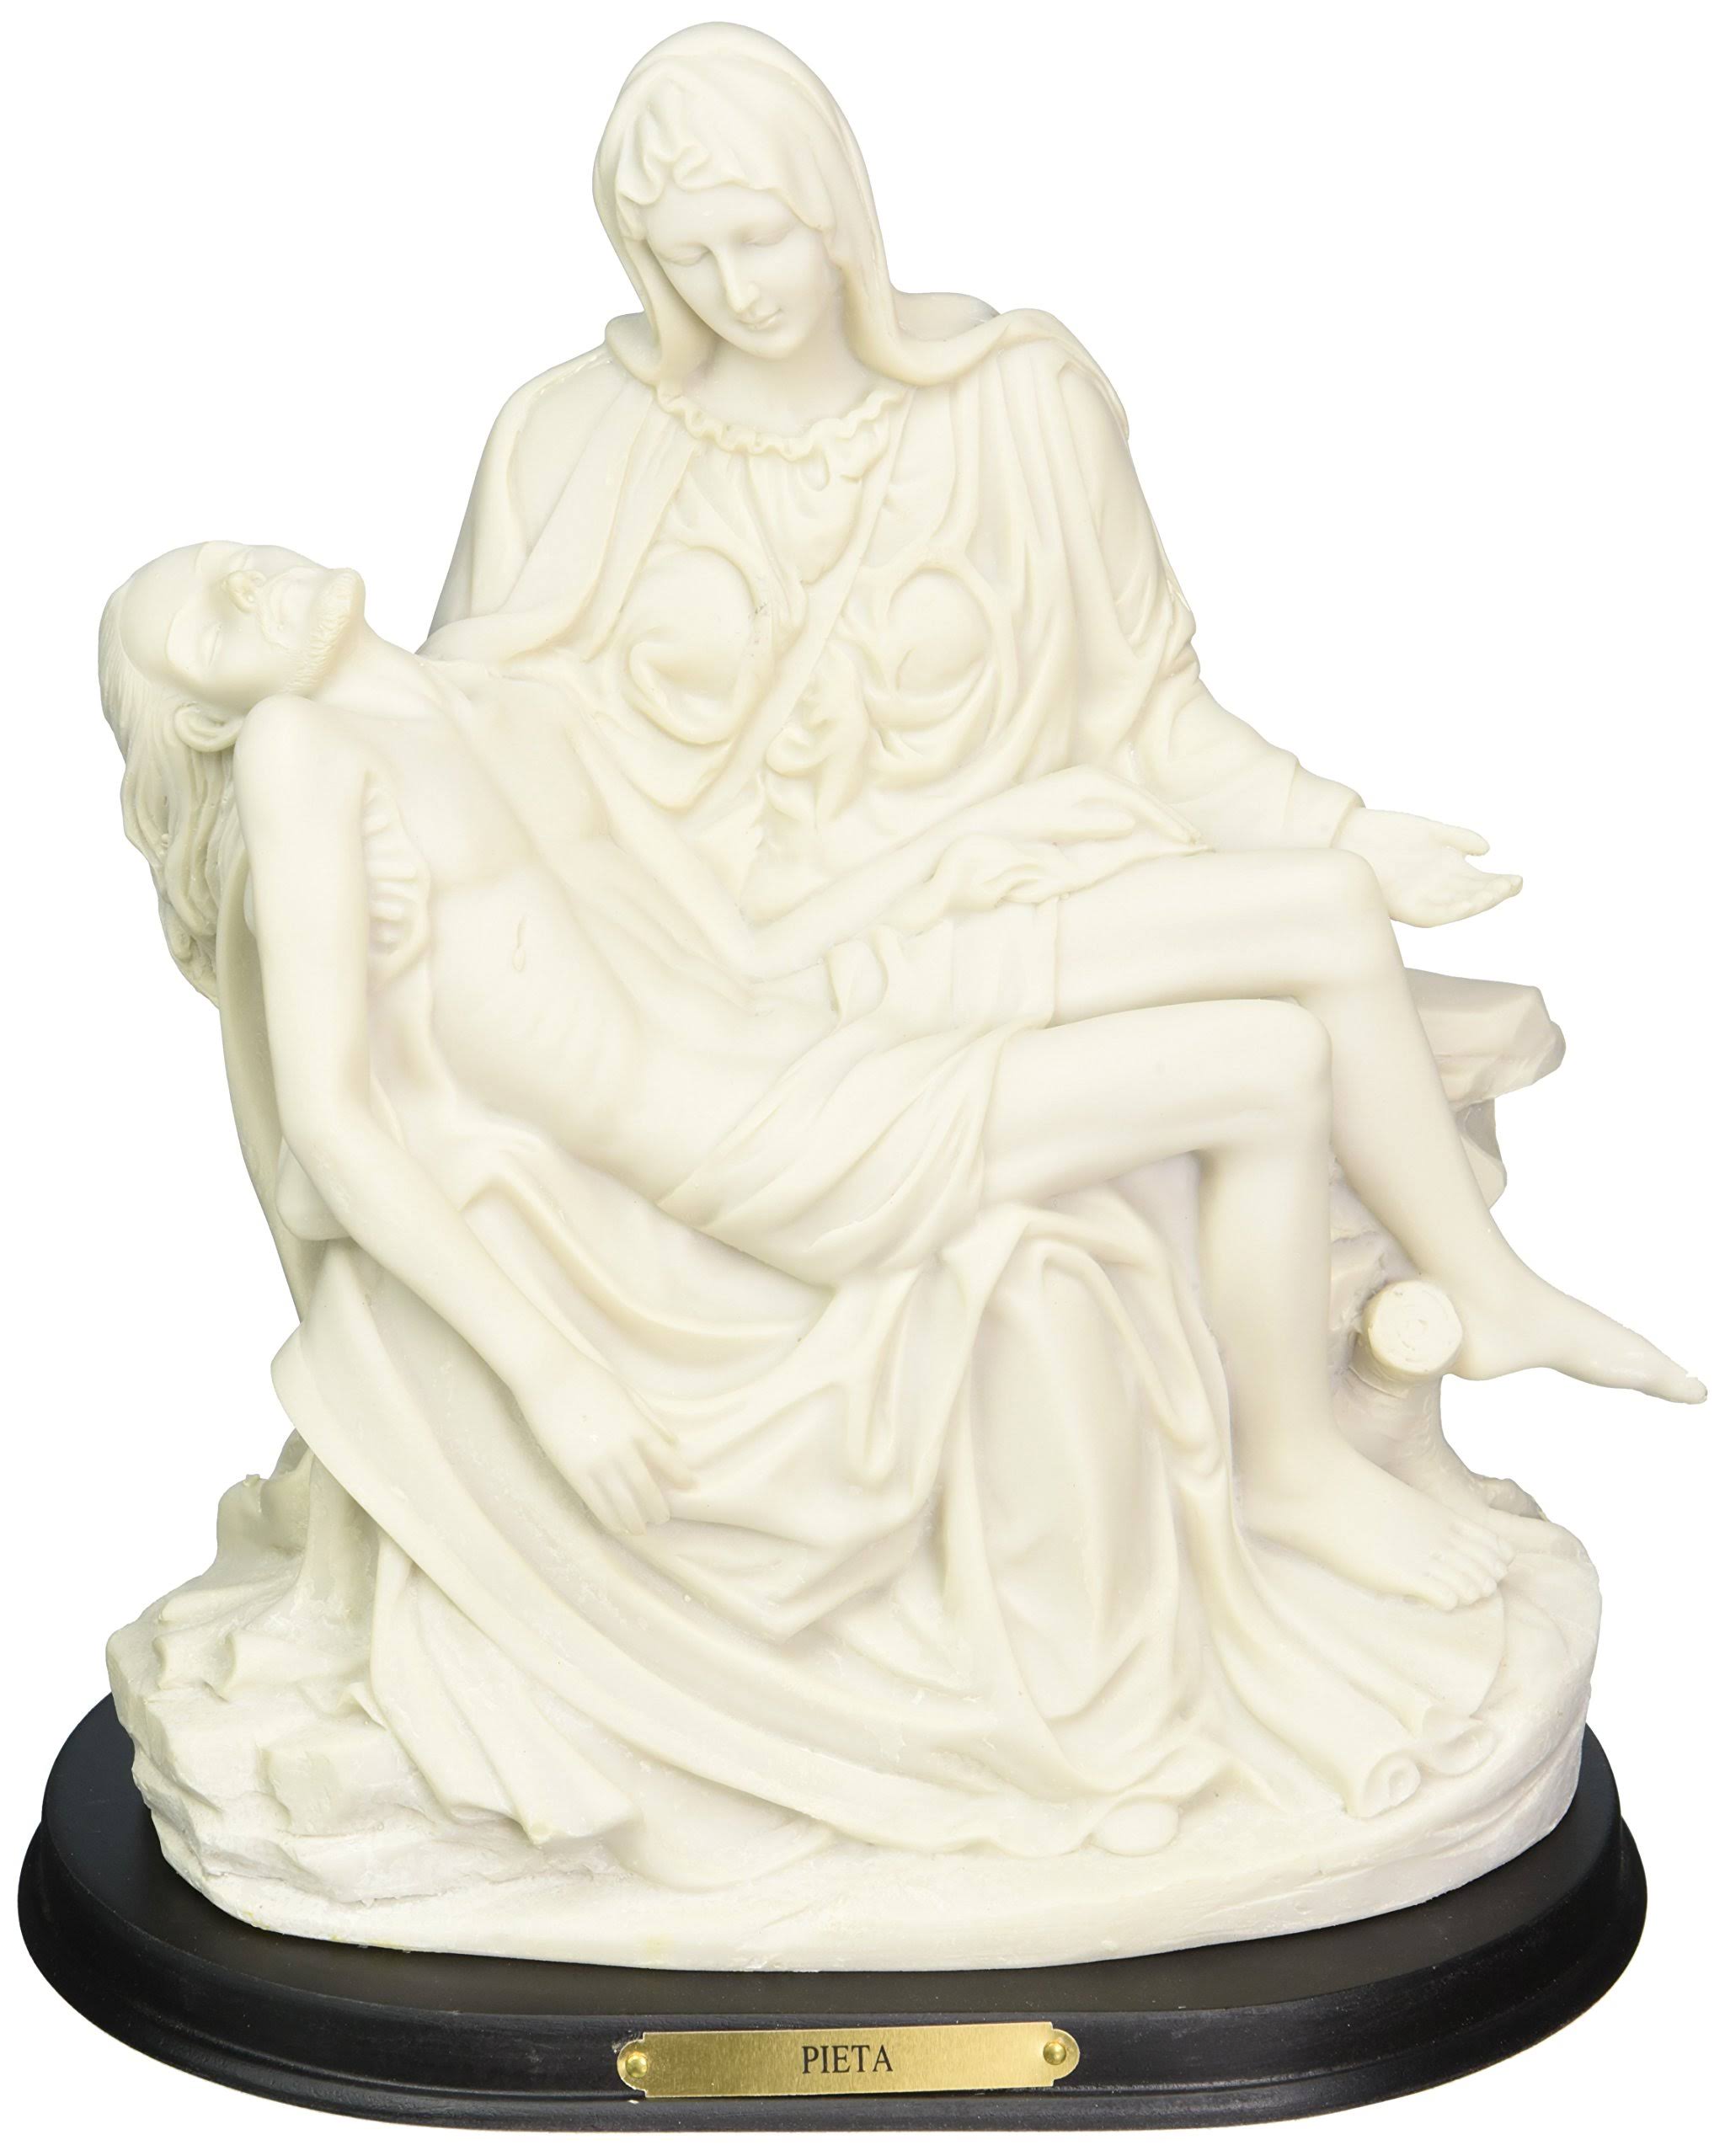 George S. Chen Imports 30cm Pieta Holy Jesus Virgin Mary Religious Figurine | Decor